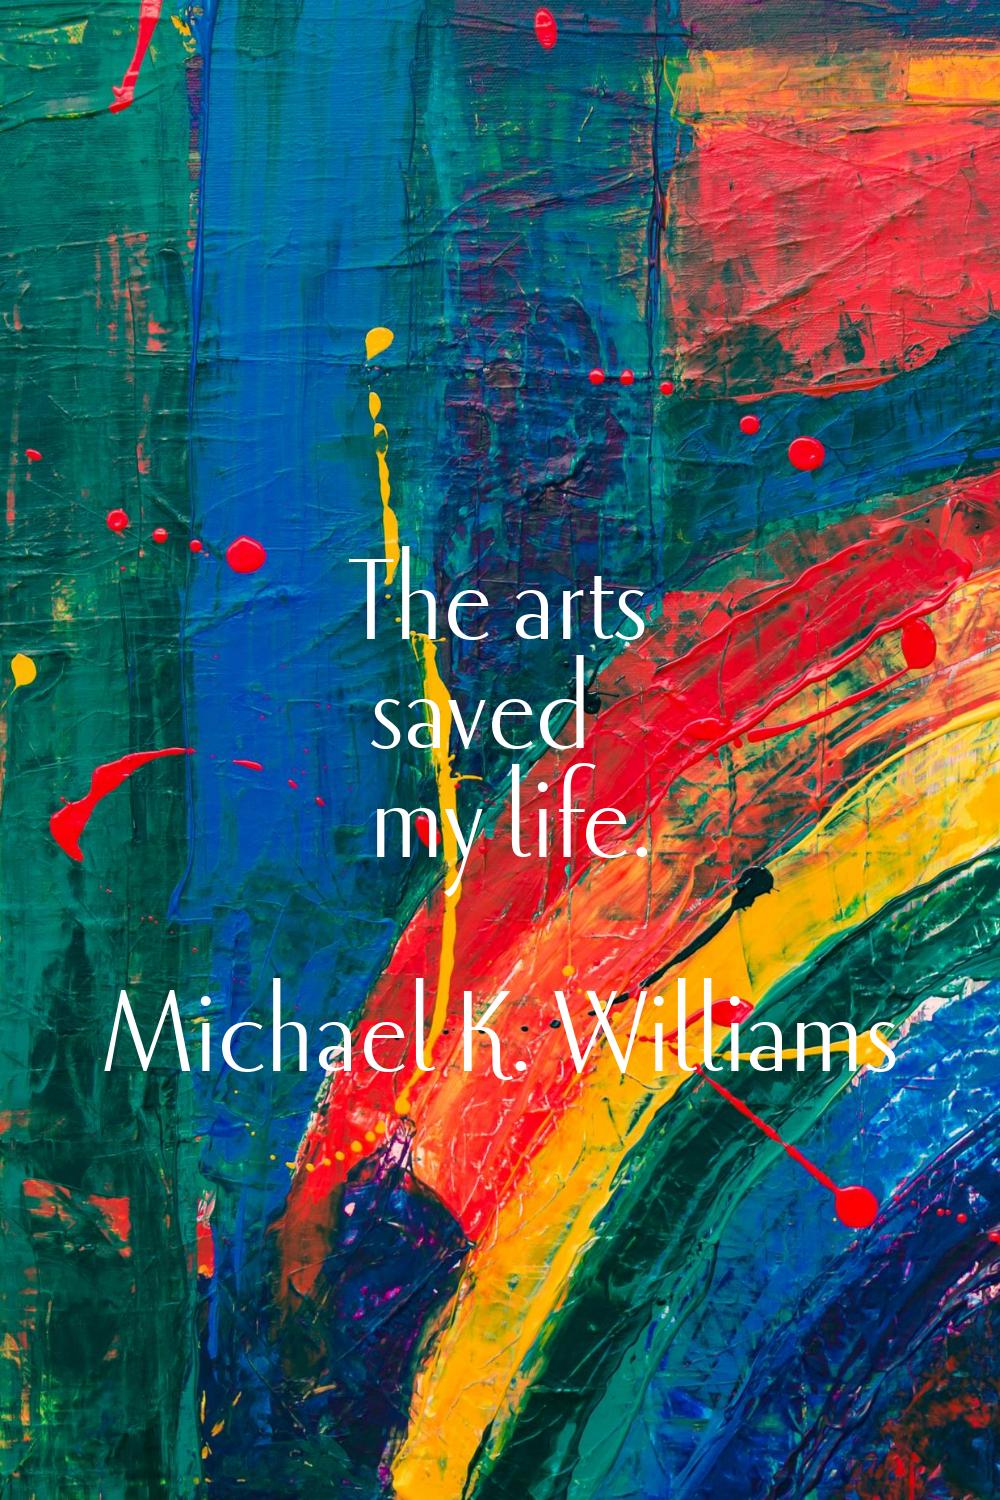 The arts saved my life.